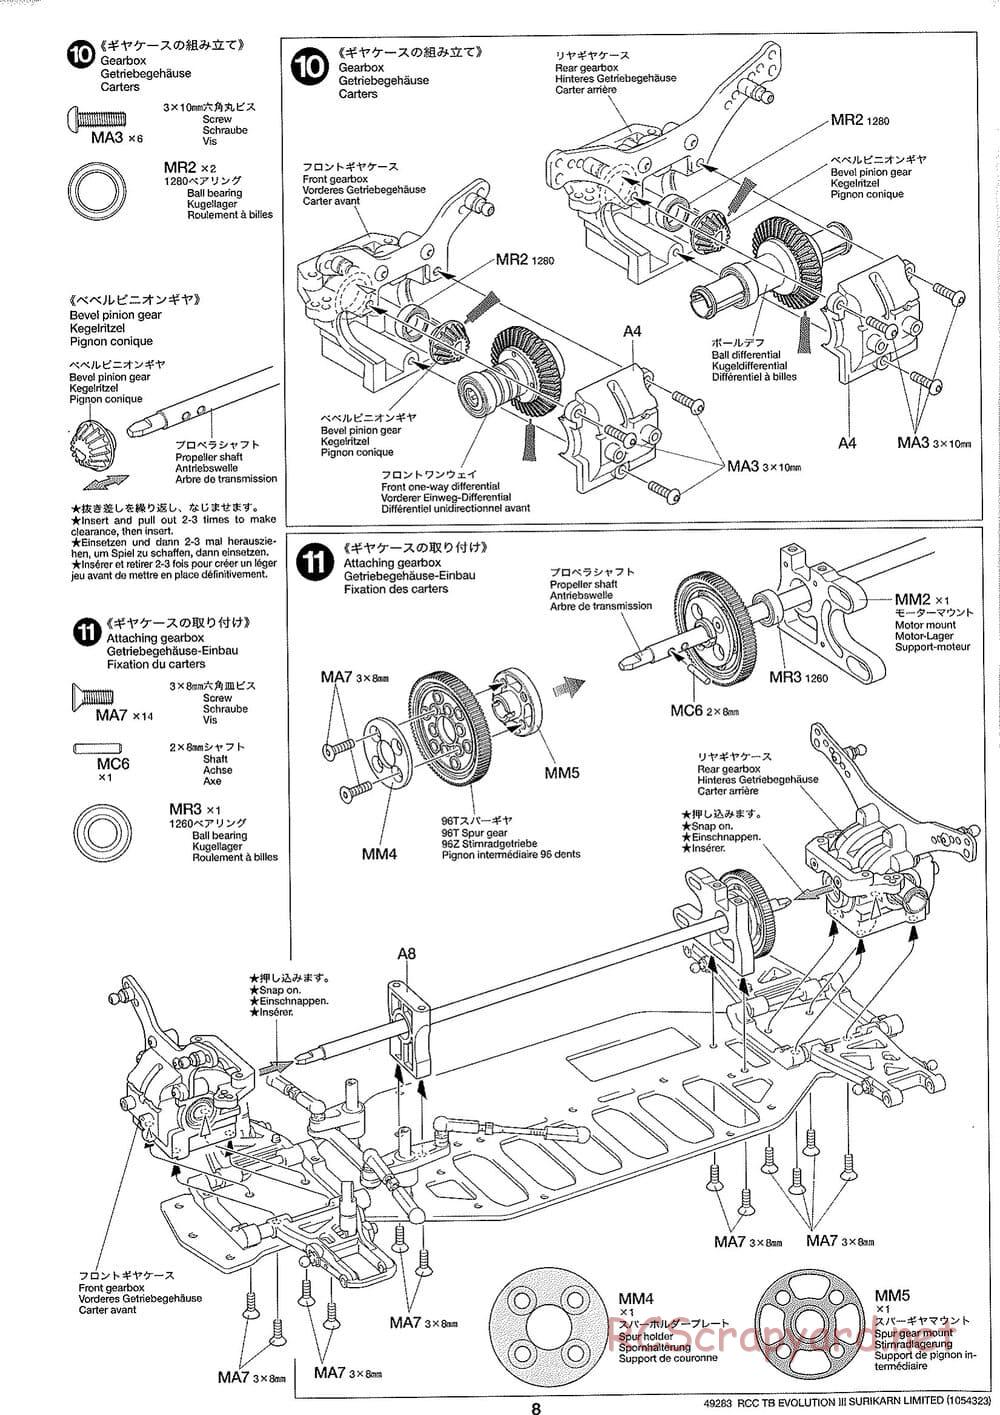 Tamiya - TB Evolution III Surikarn Limited Chassis - Manual - Page 8